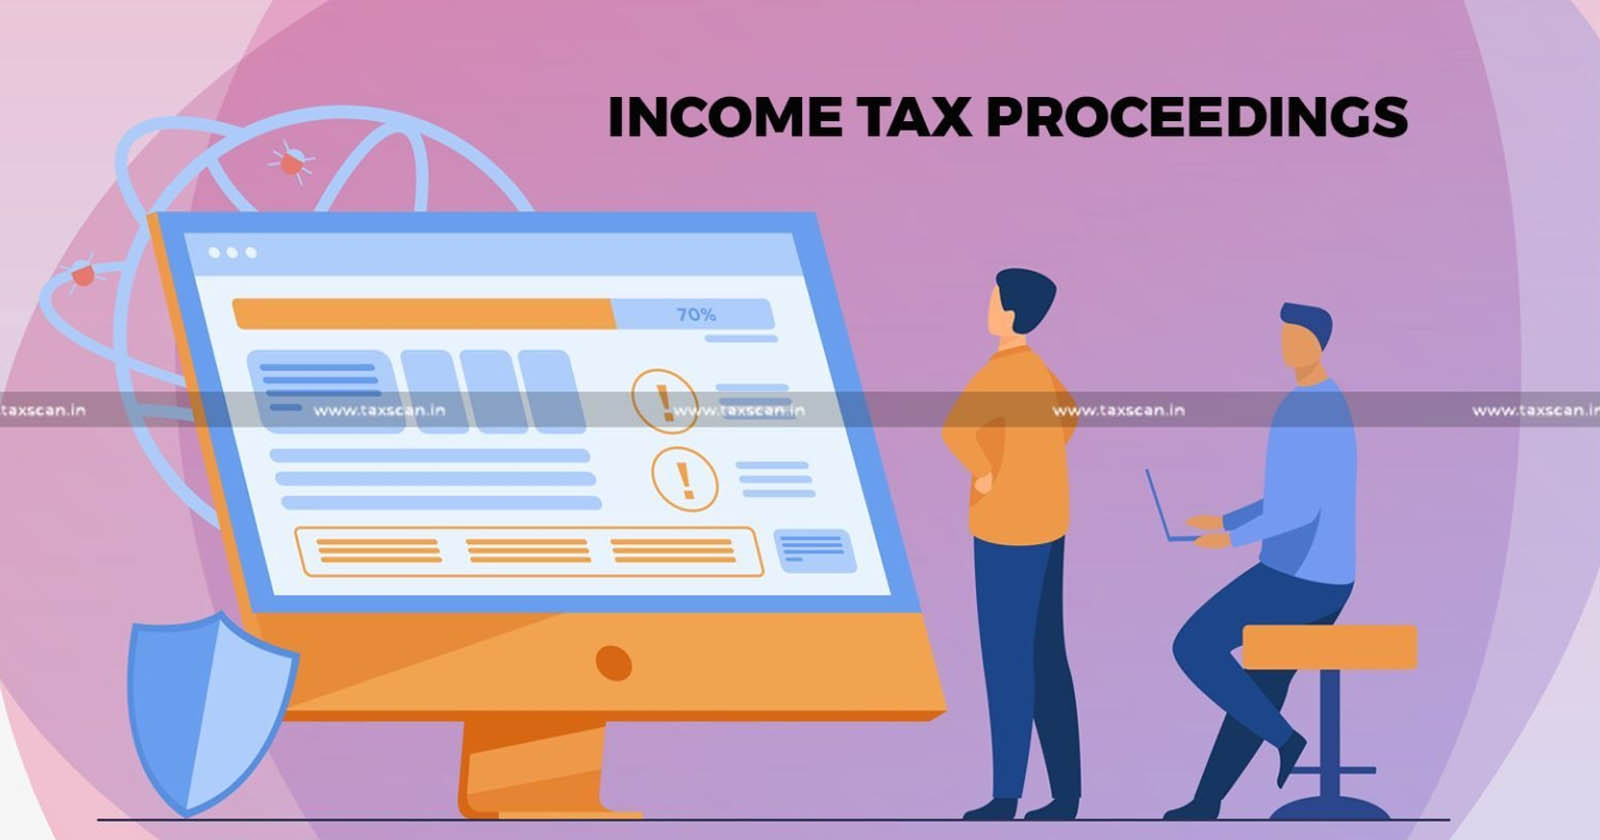 Son - Succeed Estate - Deceased - Assessee - Legal Representative - Income Tax - Proceedings - ITAT - taxscan